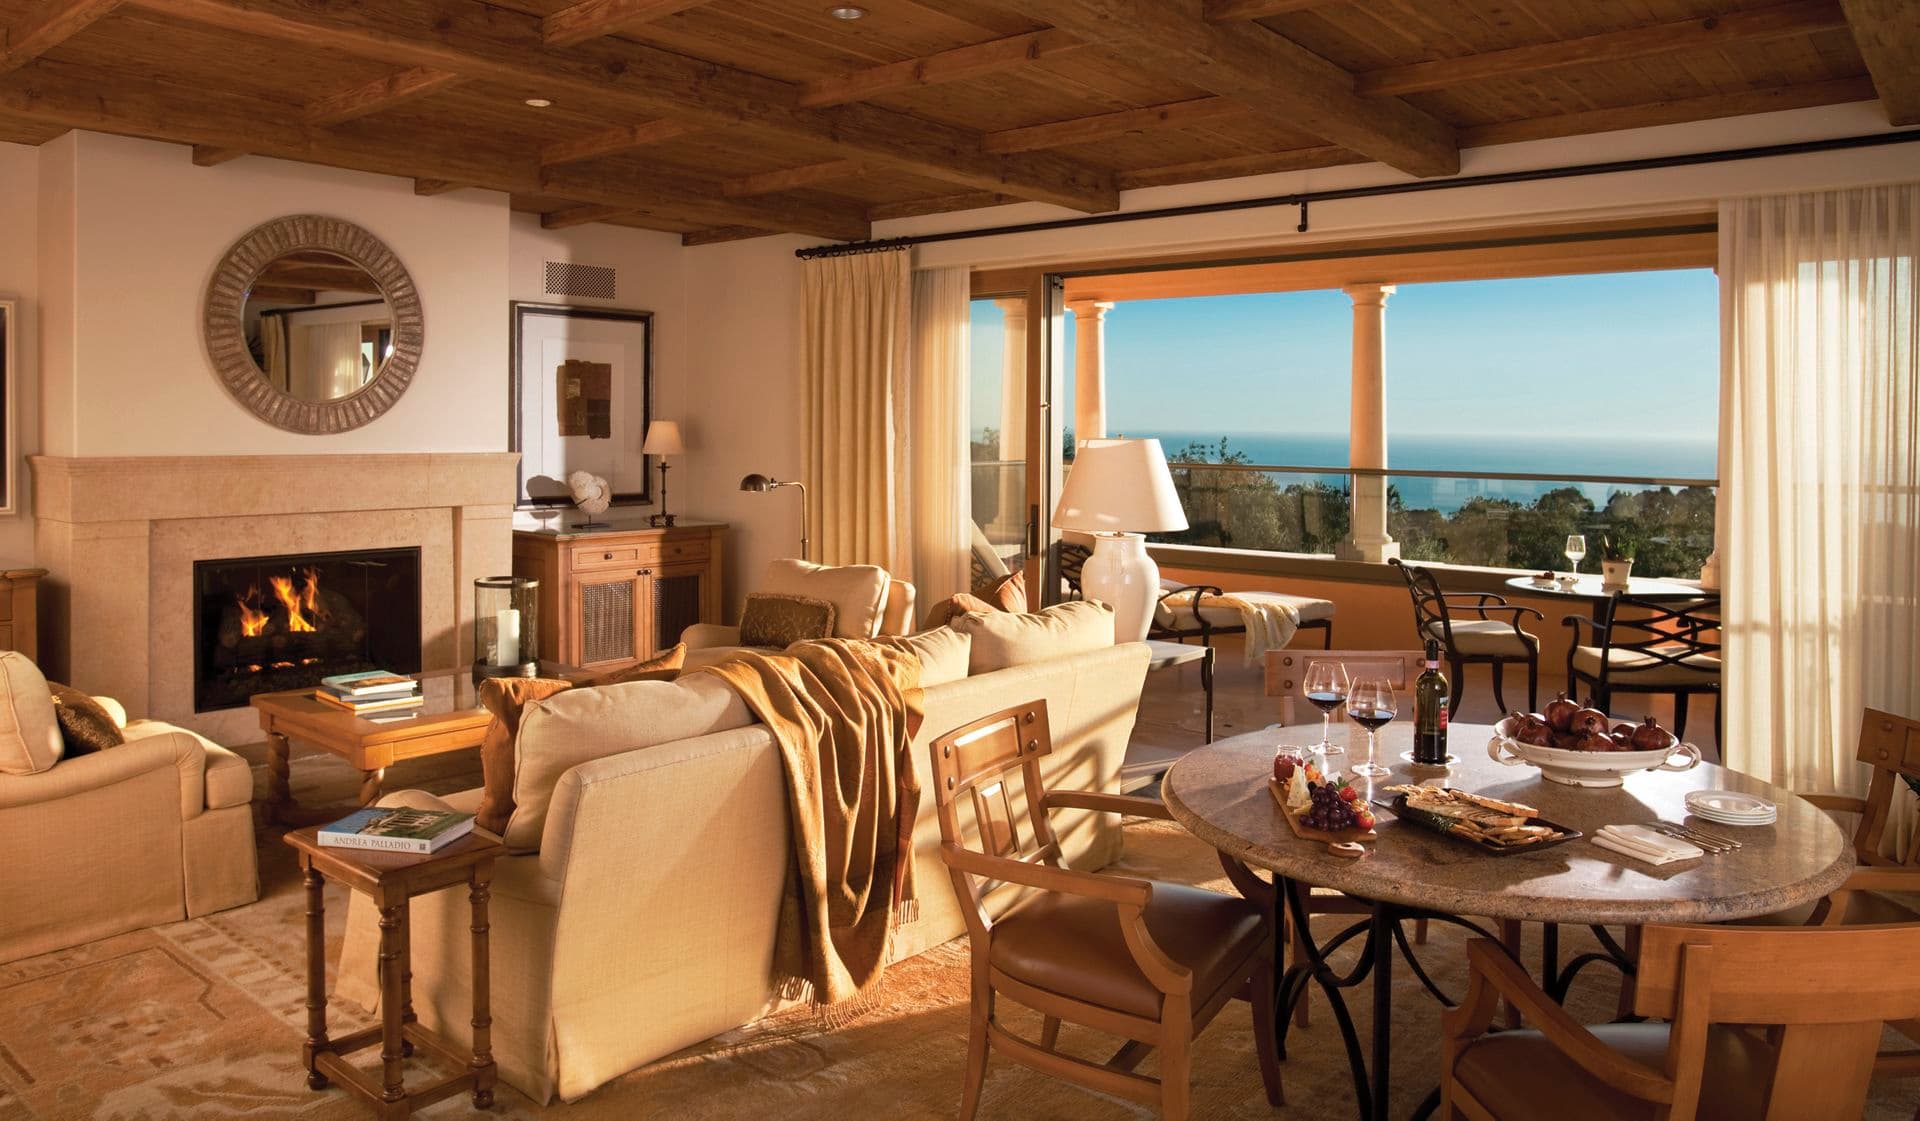 Interior Image of Villas at The Resort at Pelican Hill in Newport Beach, CA. 